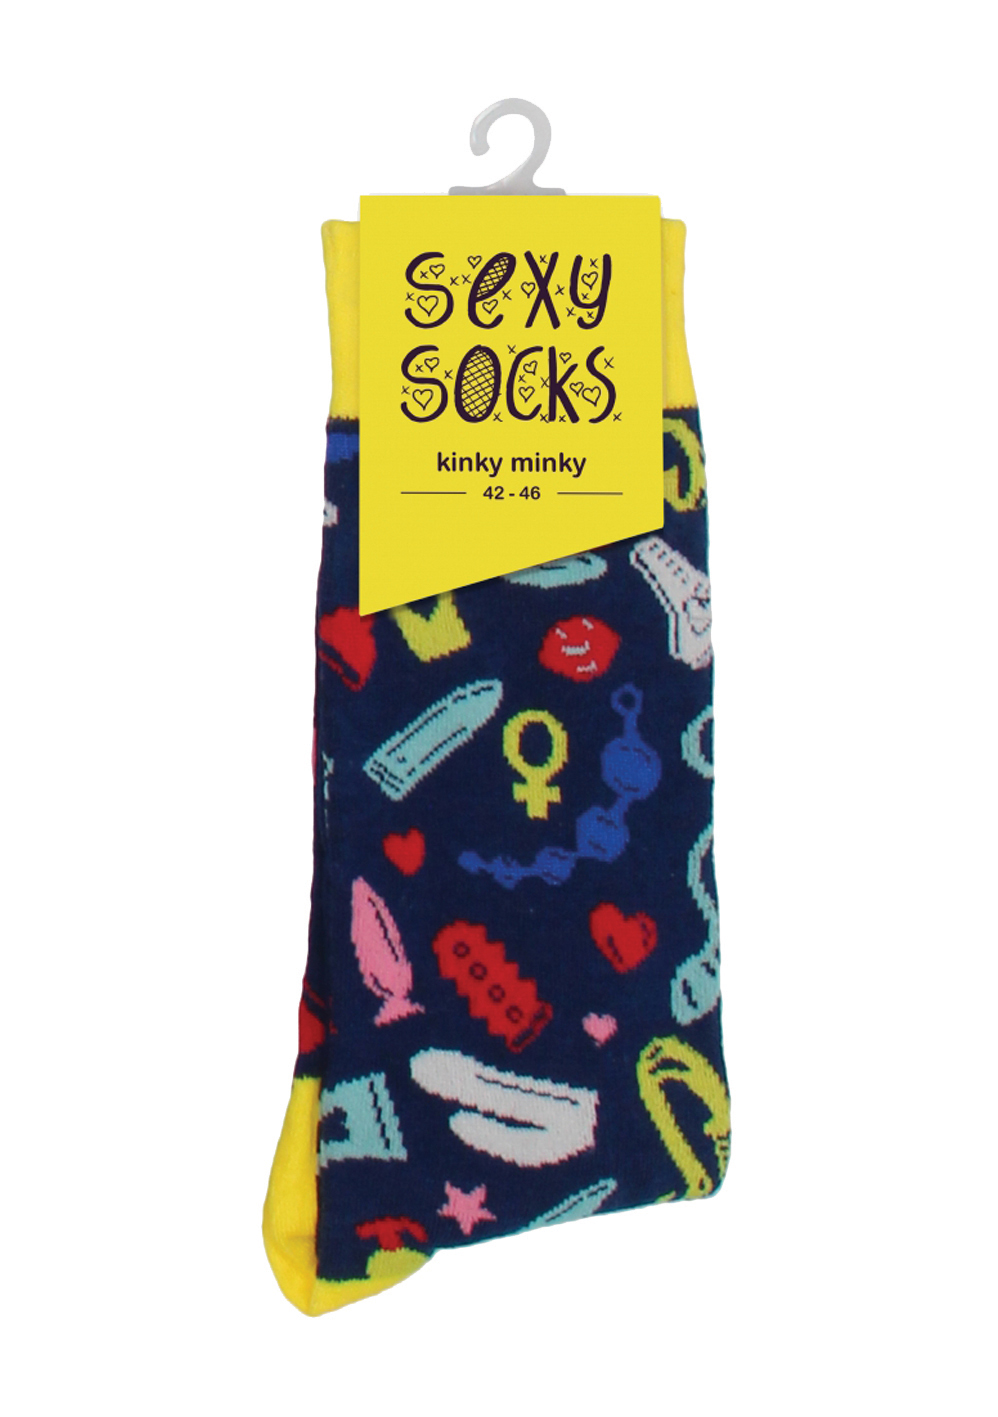 SHOTS Sexy Socks 'Kinky Minky' 42-46